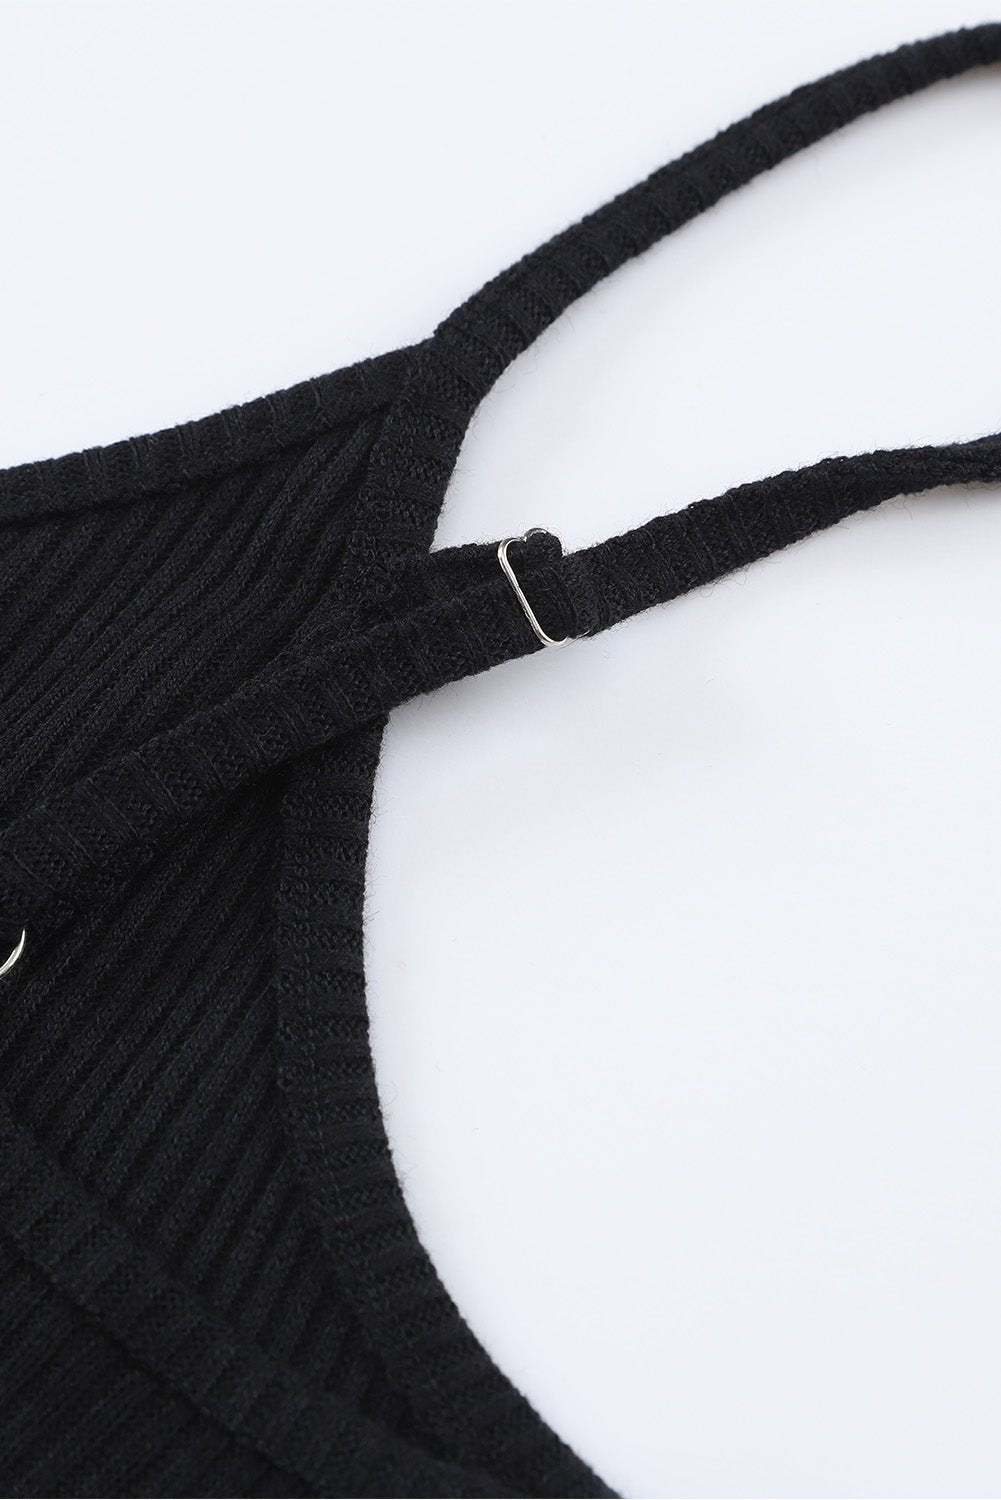 Fashionsarah.com Buttoned Ribbed Knit Midi Dress with Slit